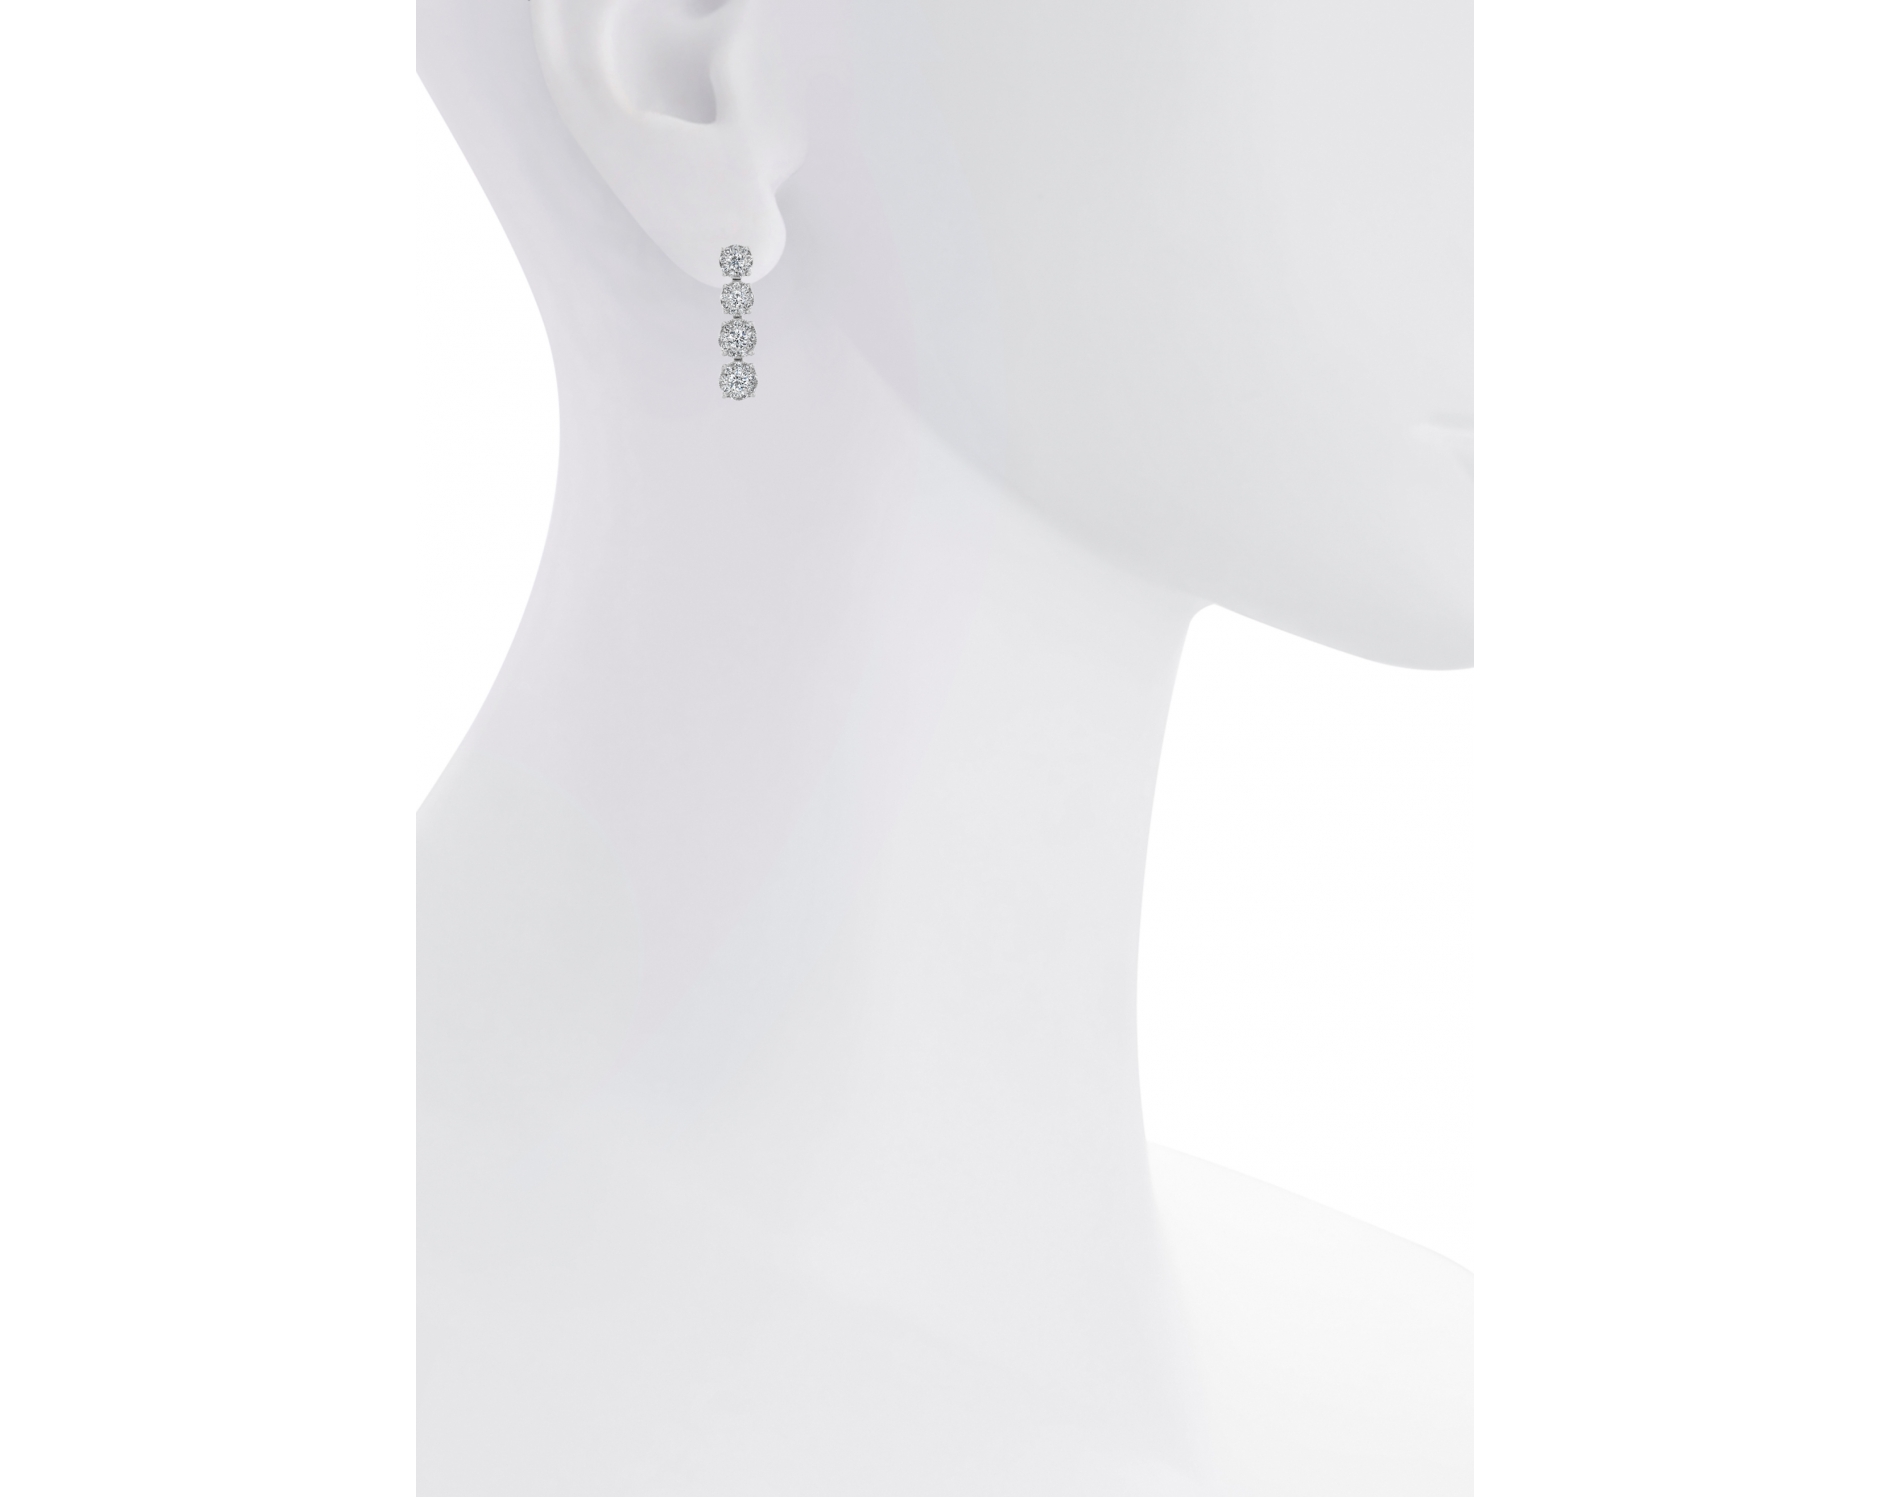 18k white gold halo illusion set hanging diamond earrings Photos & images